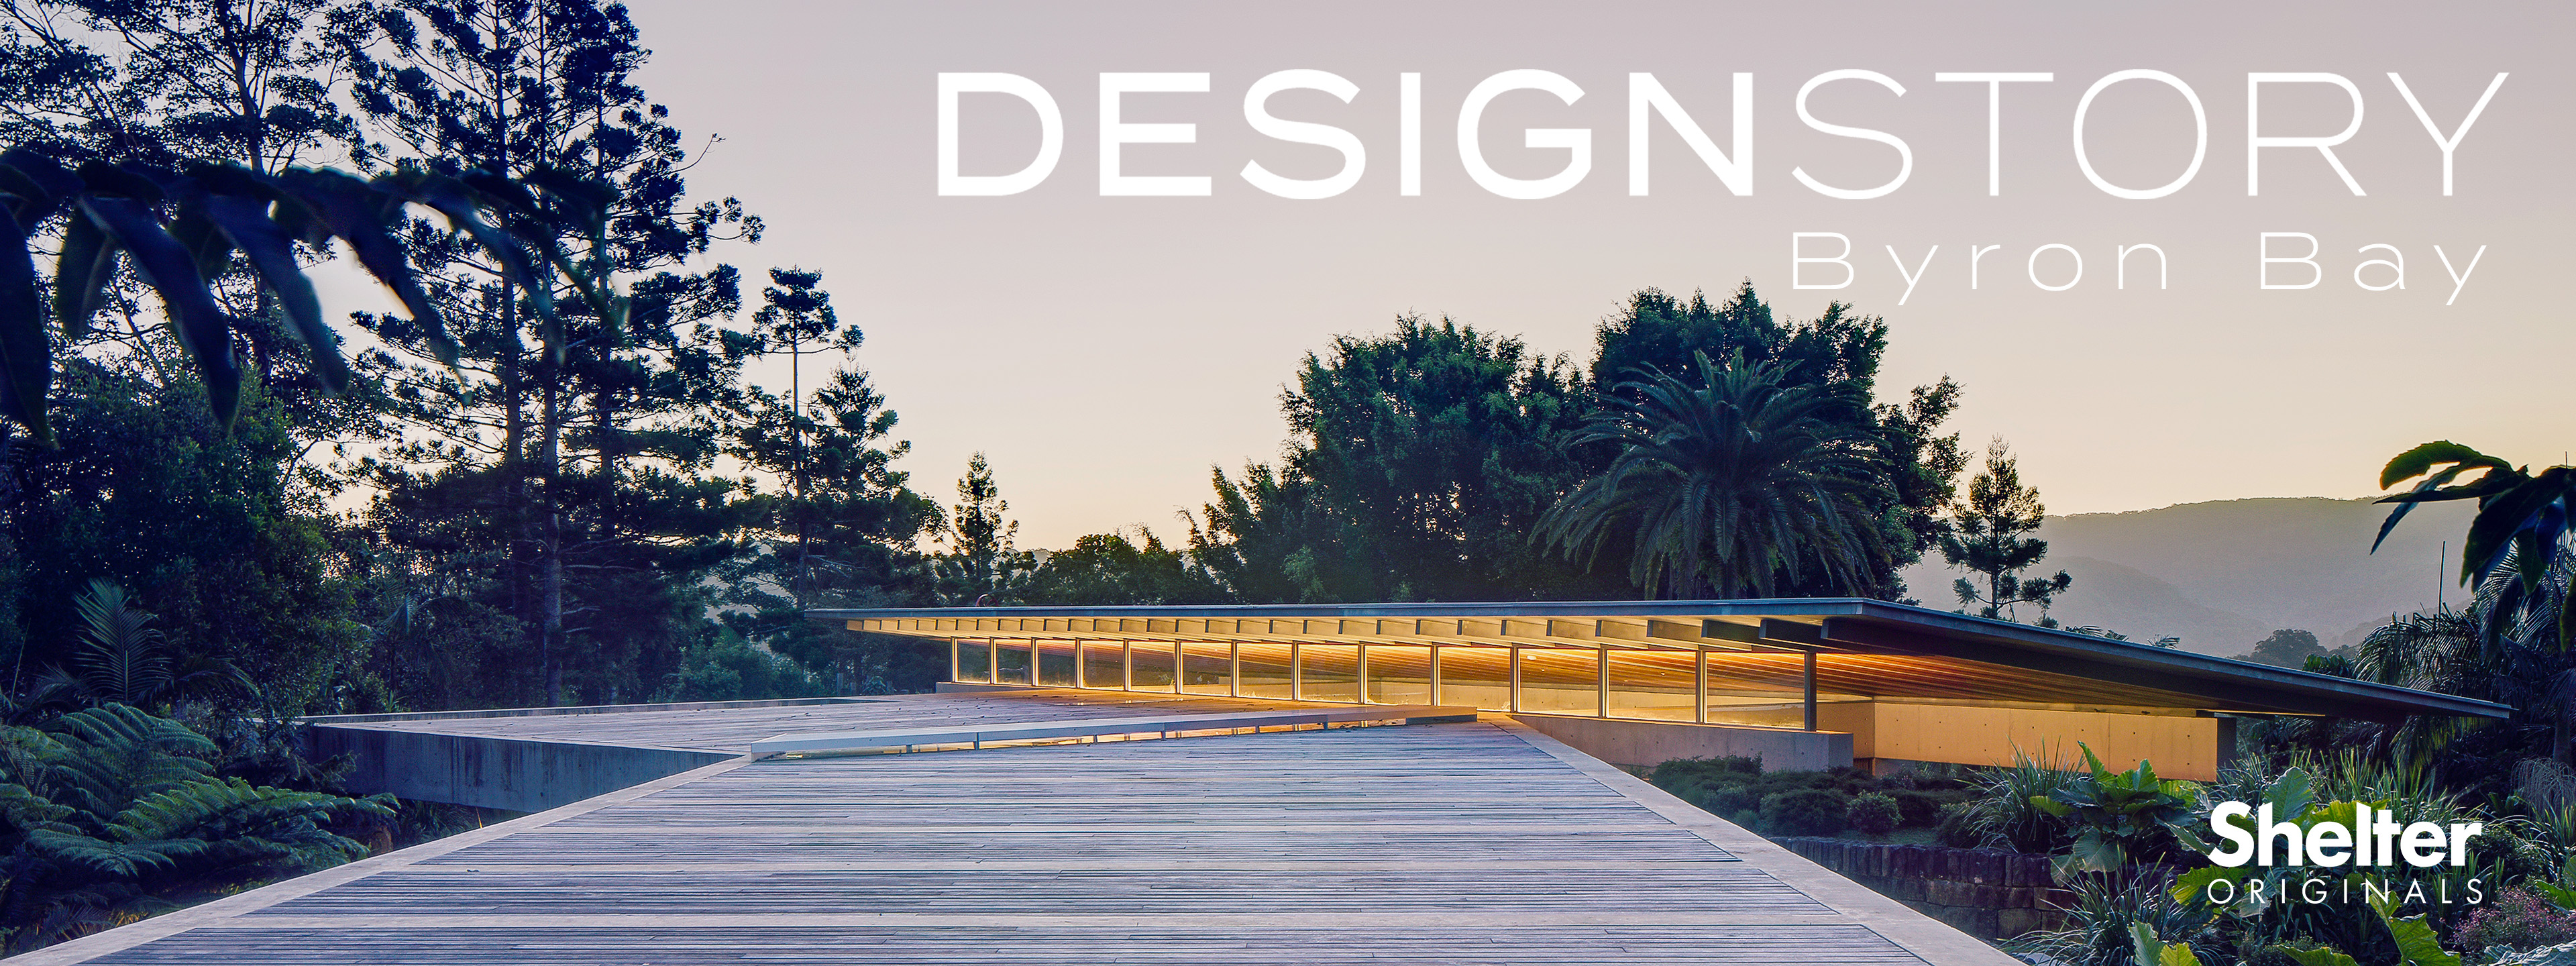 Design Story: Byron Bay